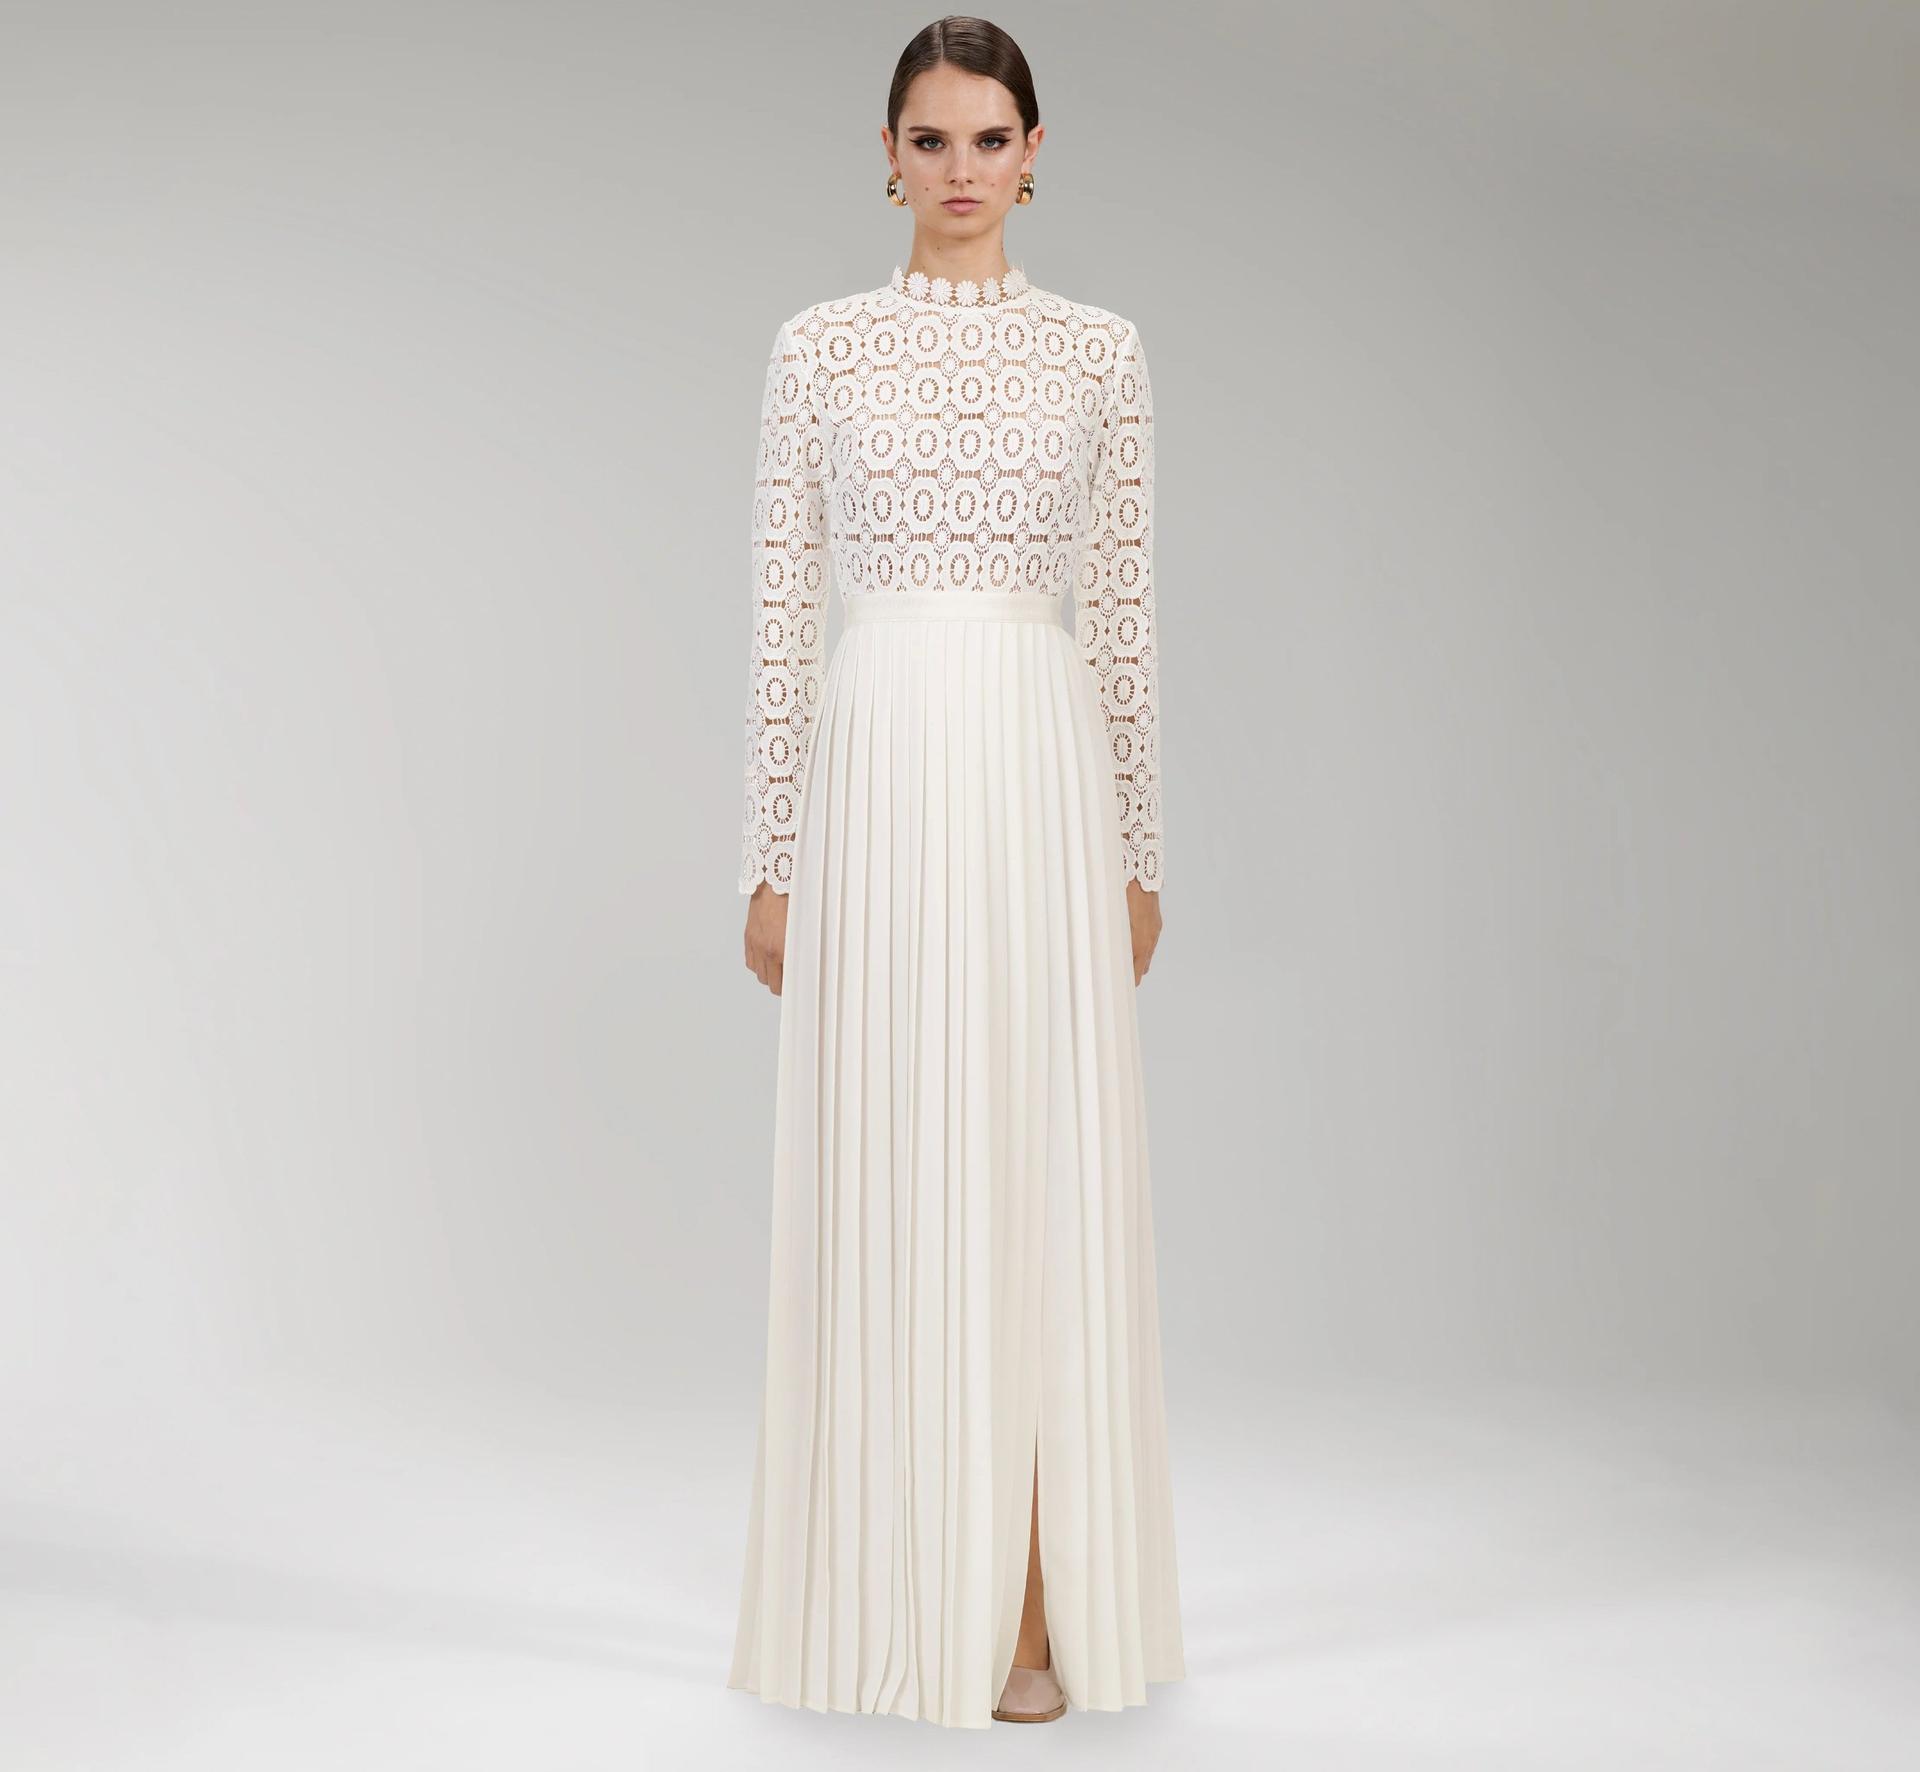 30 Best Long Sleeve Wedding Dresses - hitched.co.uk - hitched.co.uk